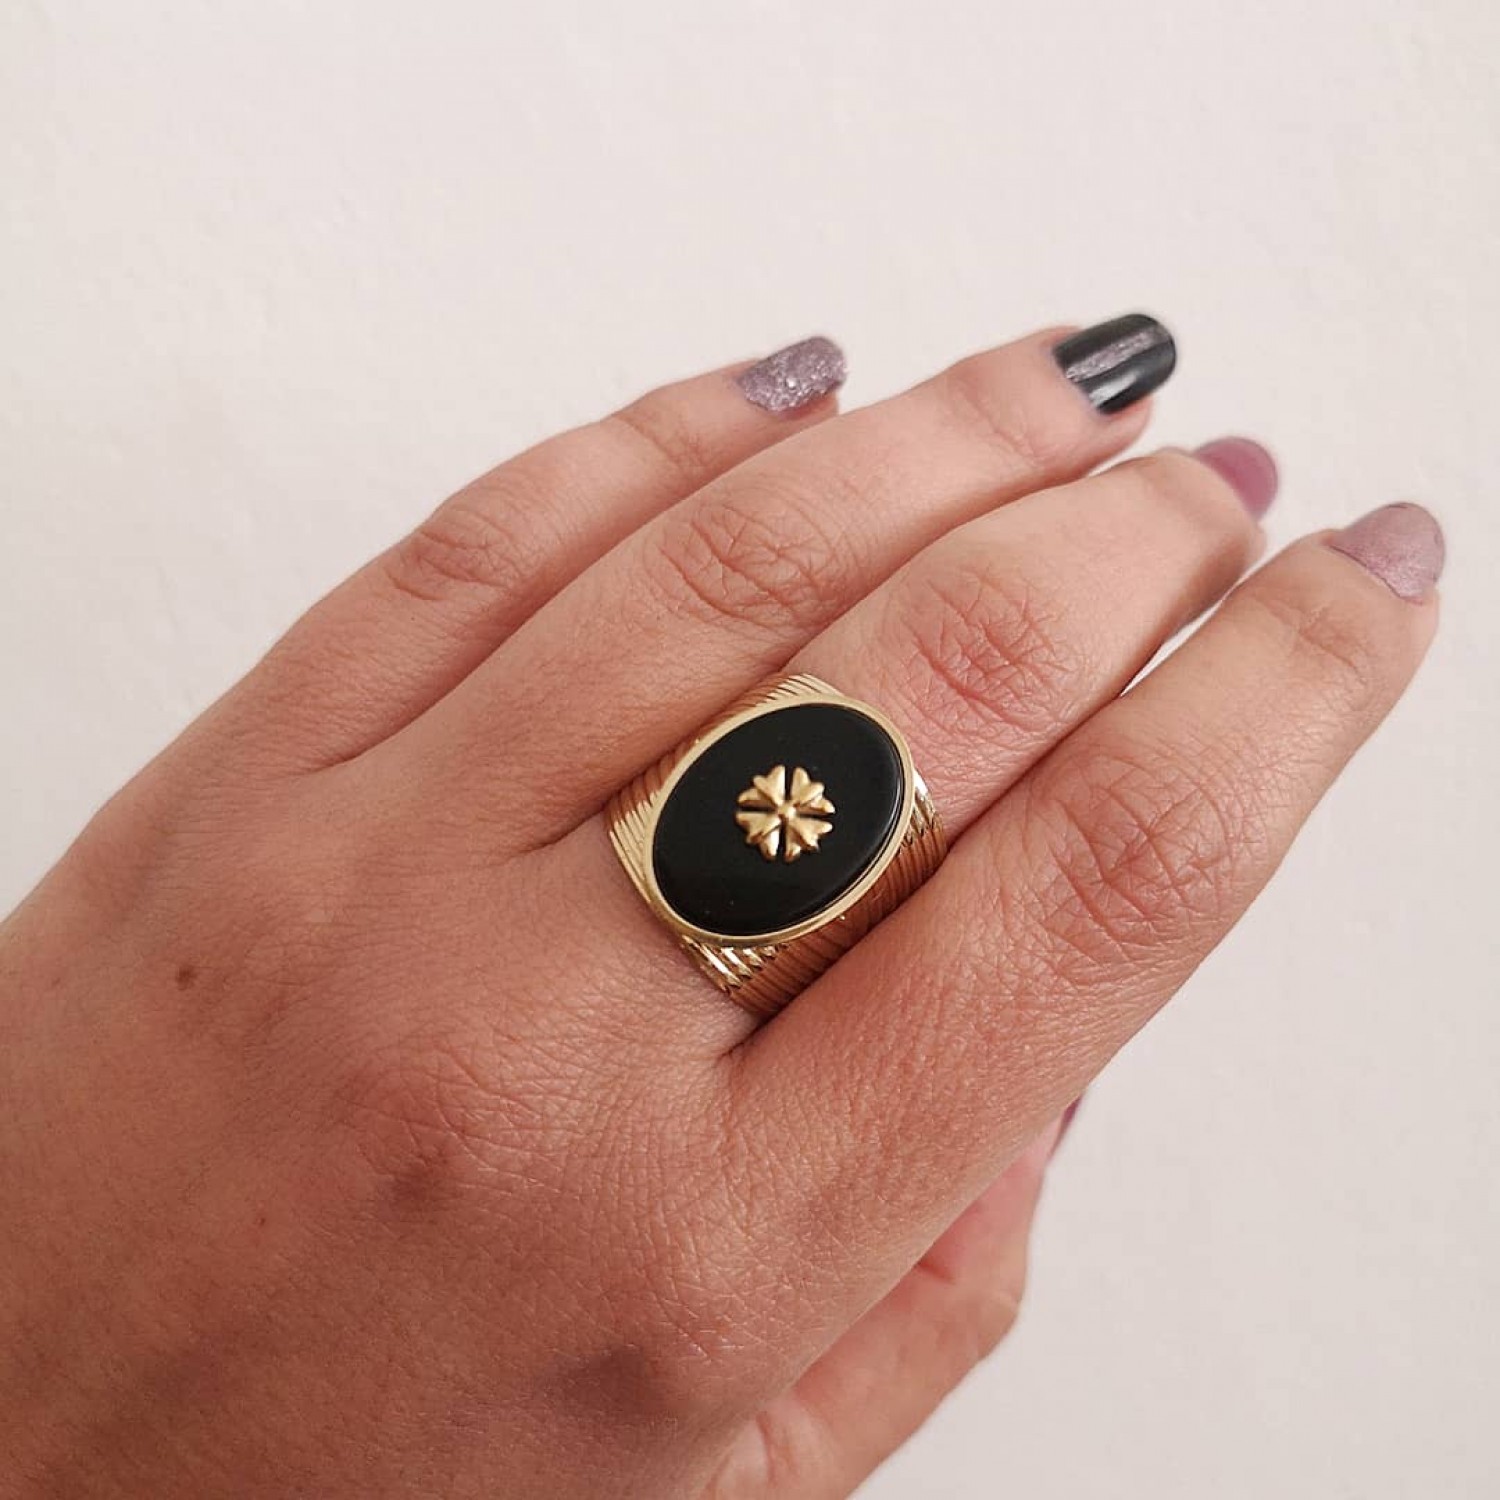 STAINLESS STEEL δαχτυλίδι ανοιγόμενο αντικέ μαύρη πέτρα κίτρινο χρυσό.